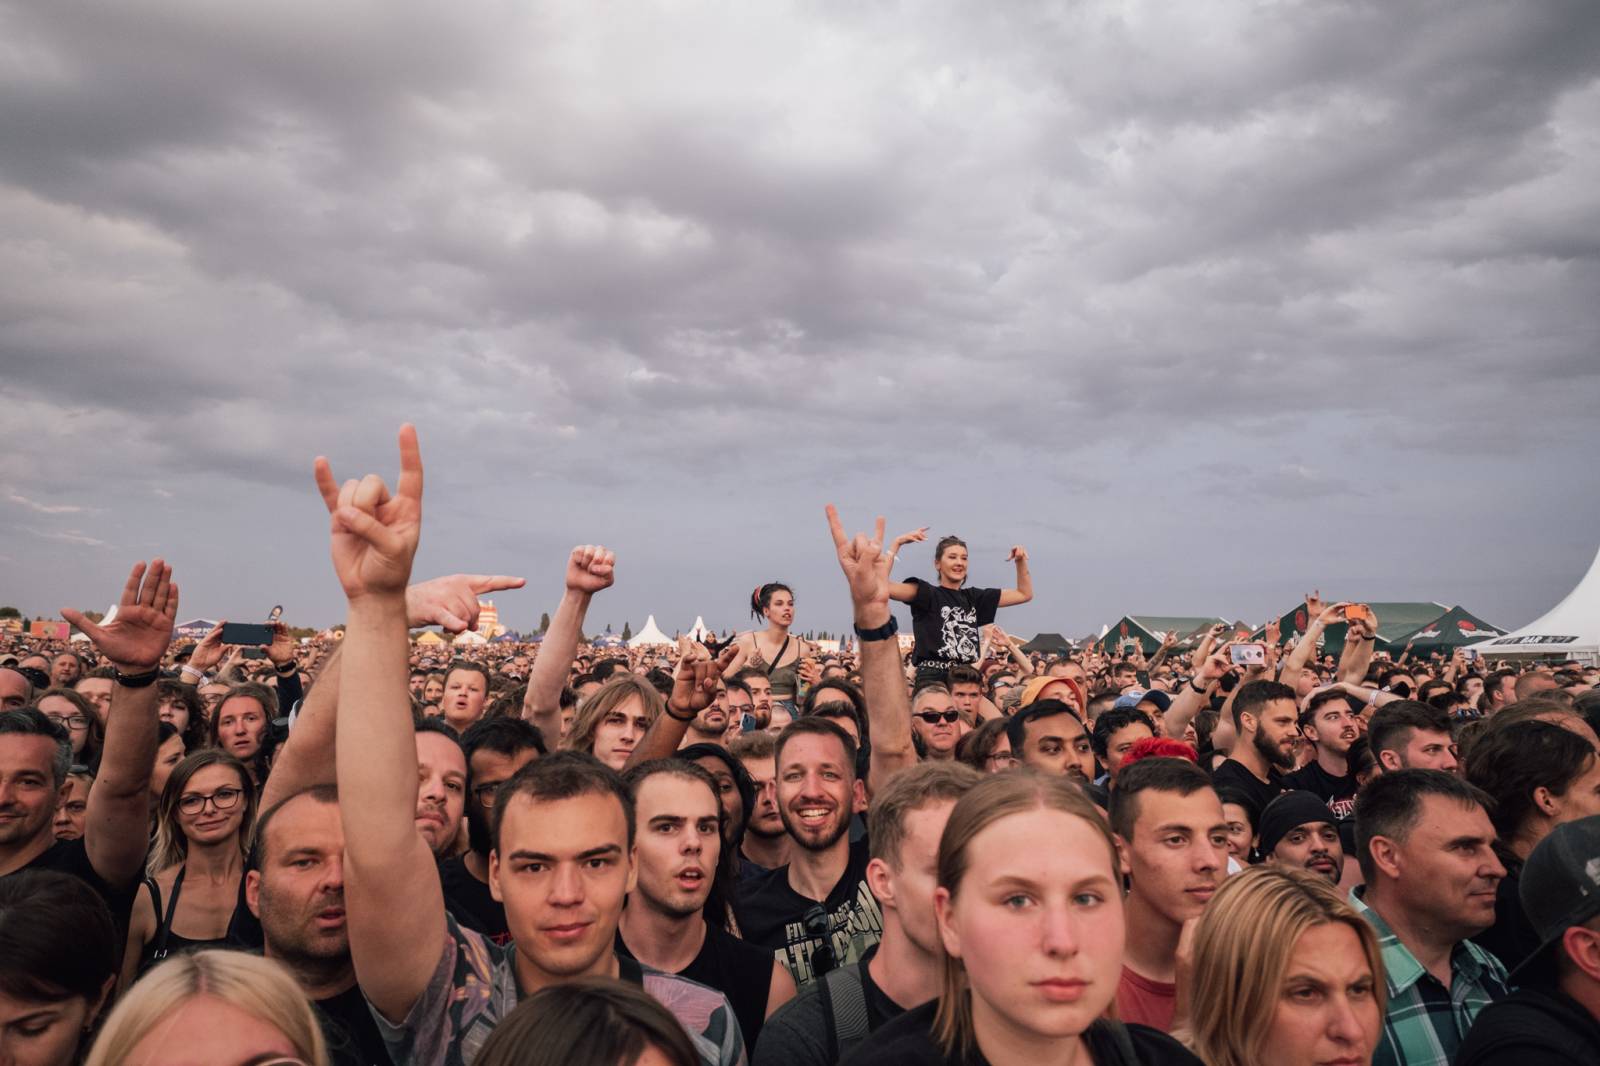 Metallica řádila na Prague Rocks, zahráli také Five Finger Death Punch